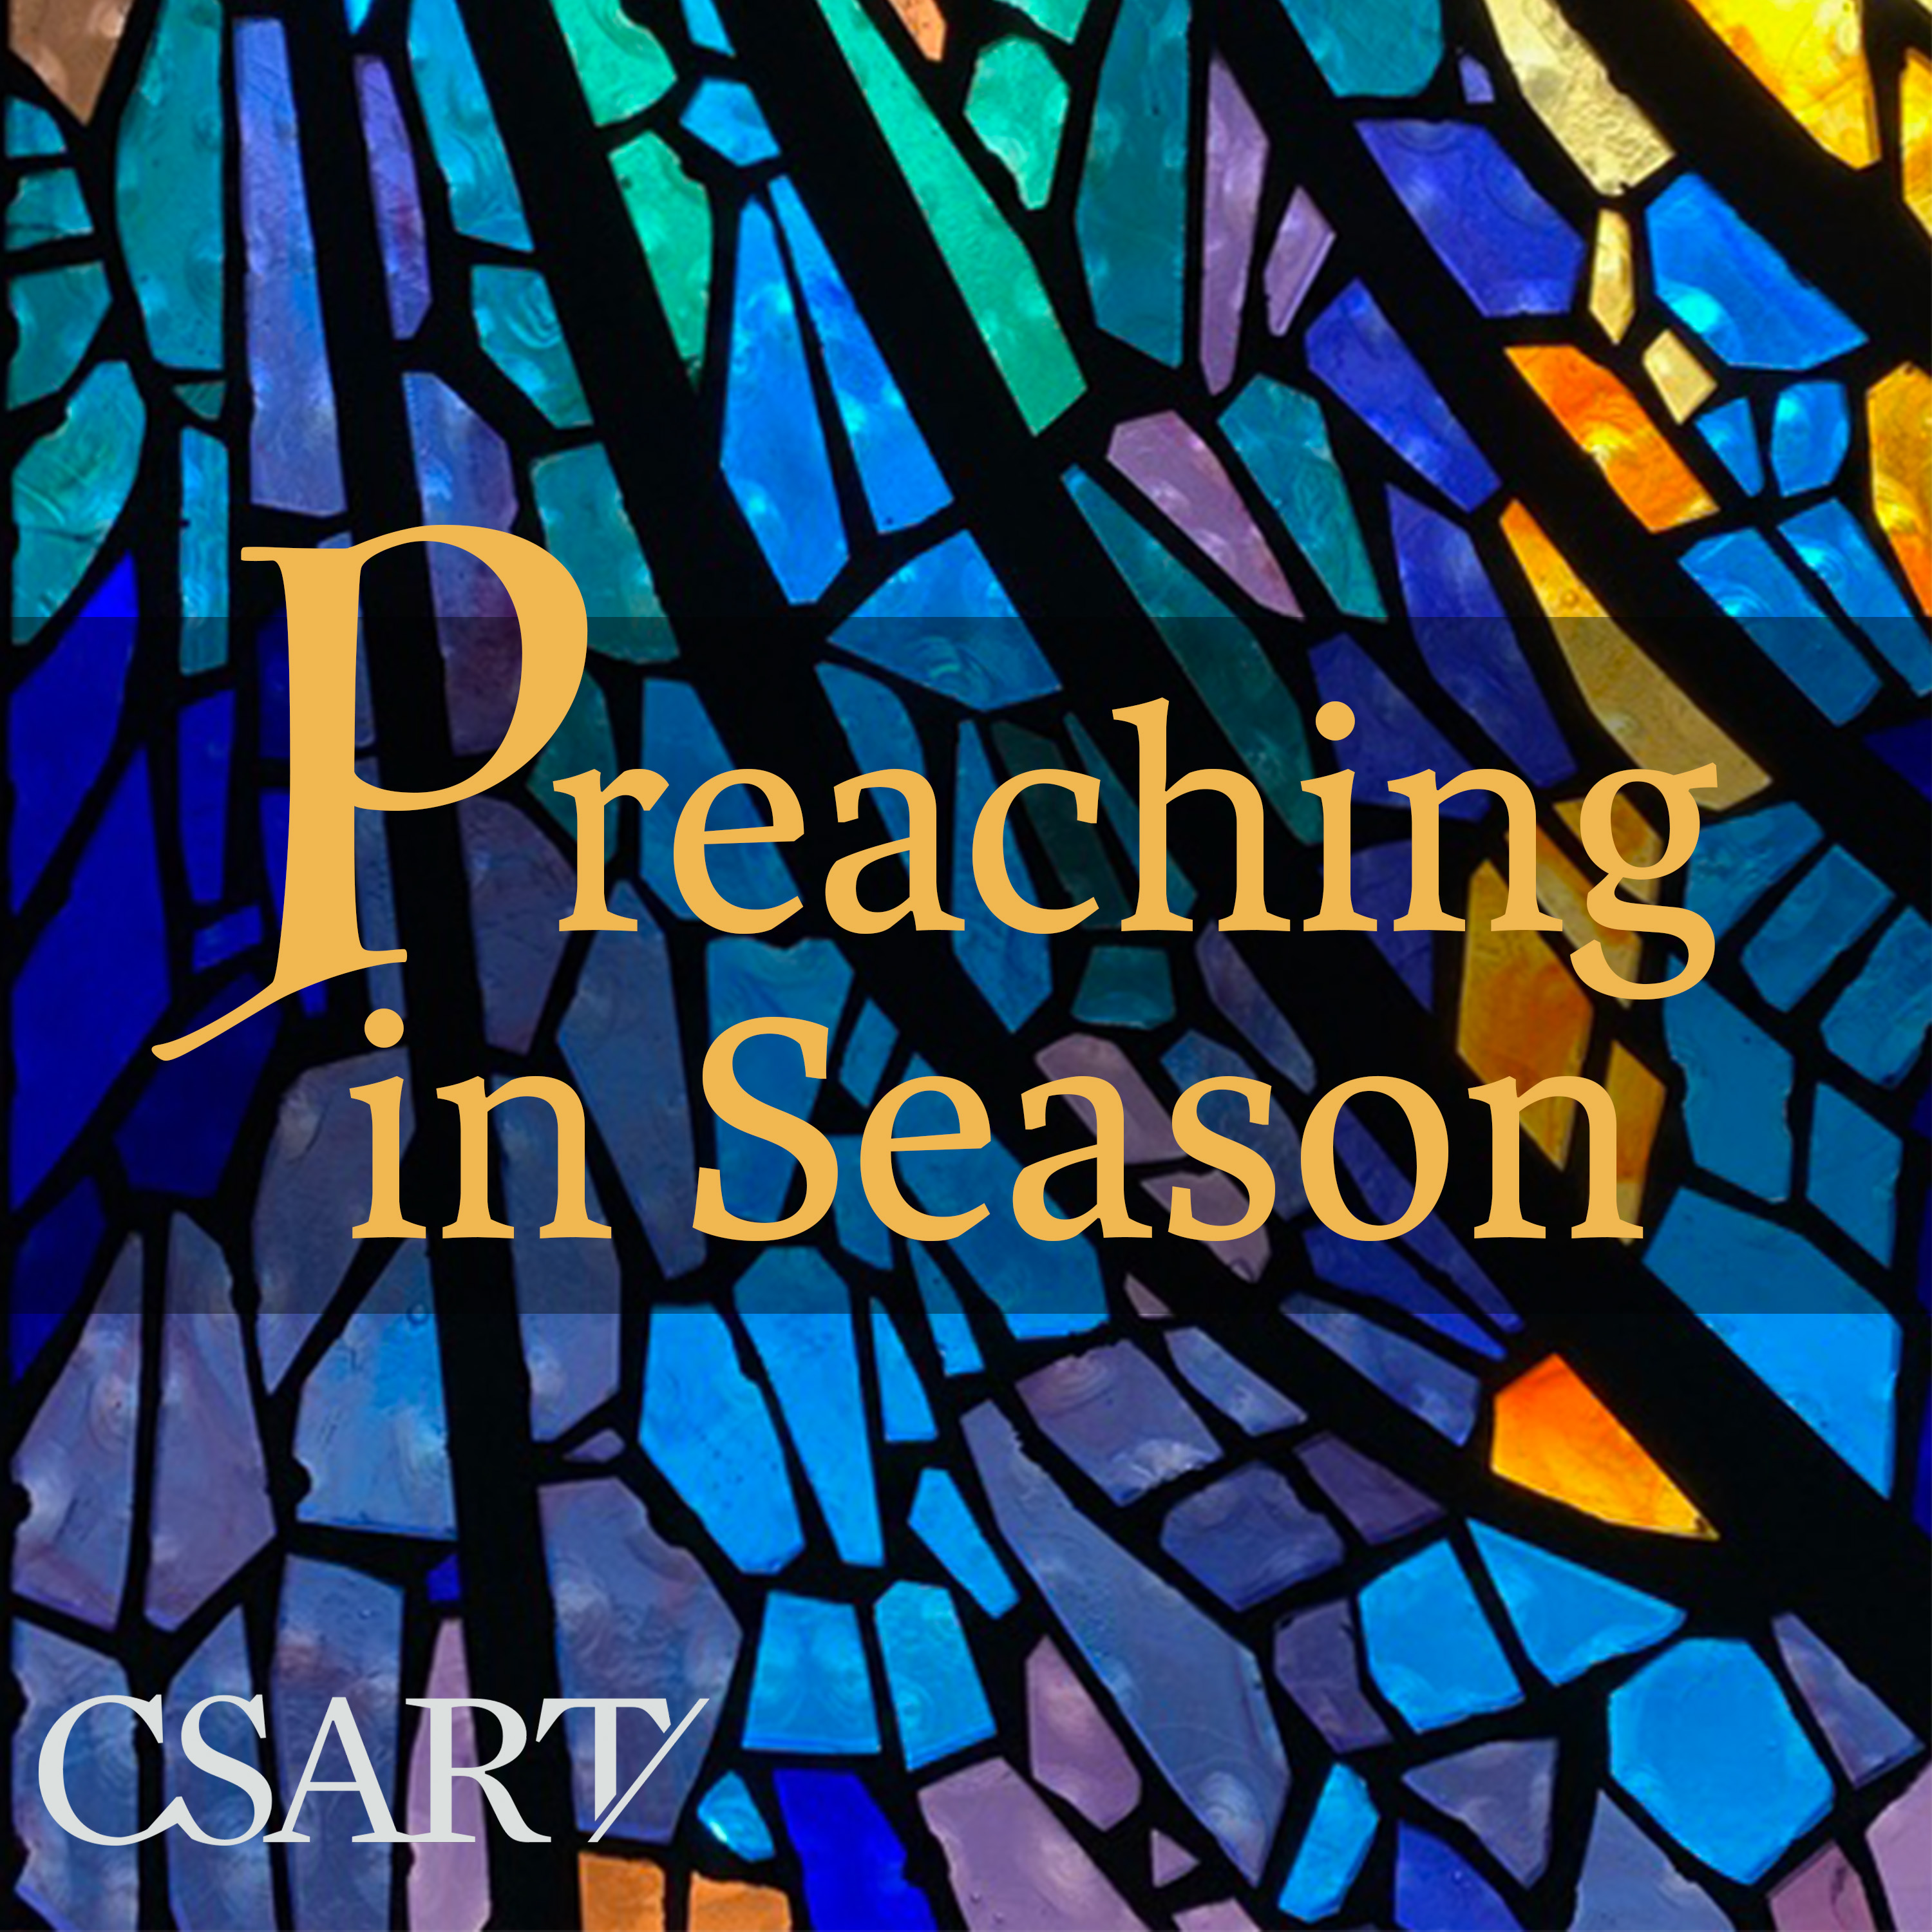 Preaching in Season